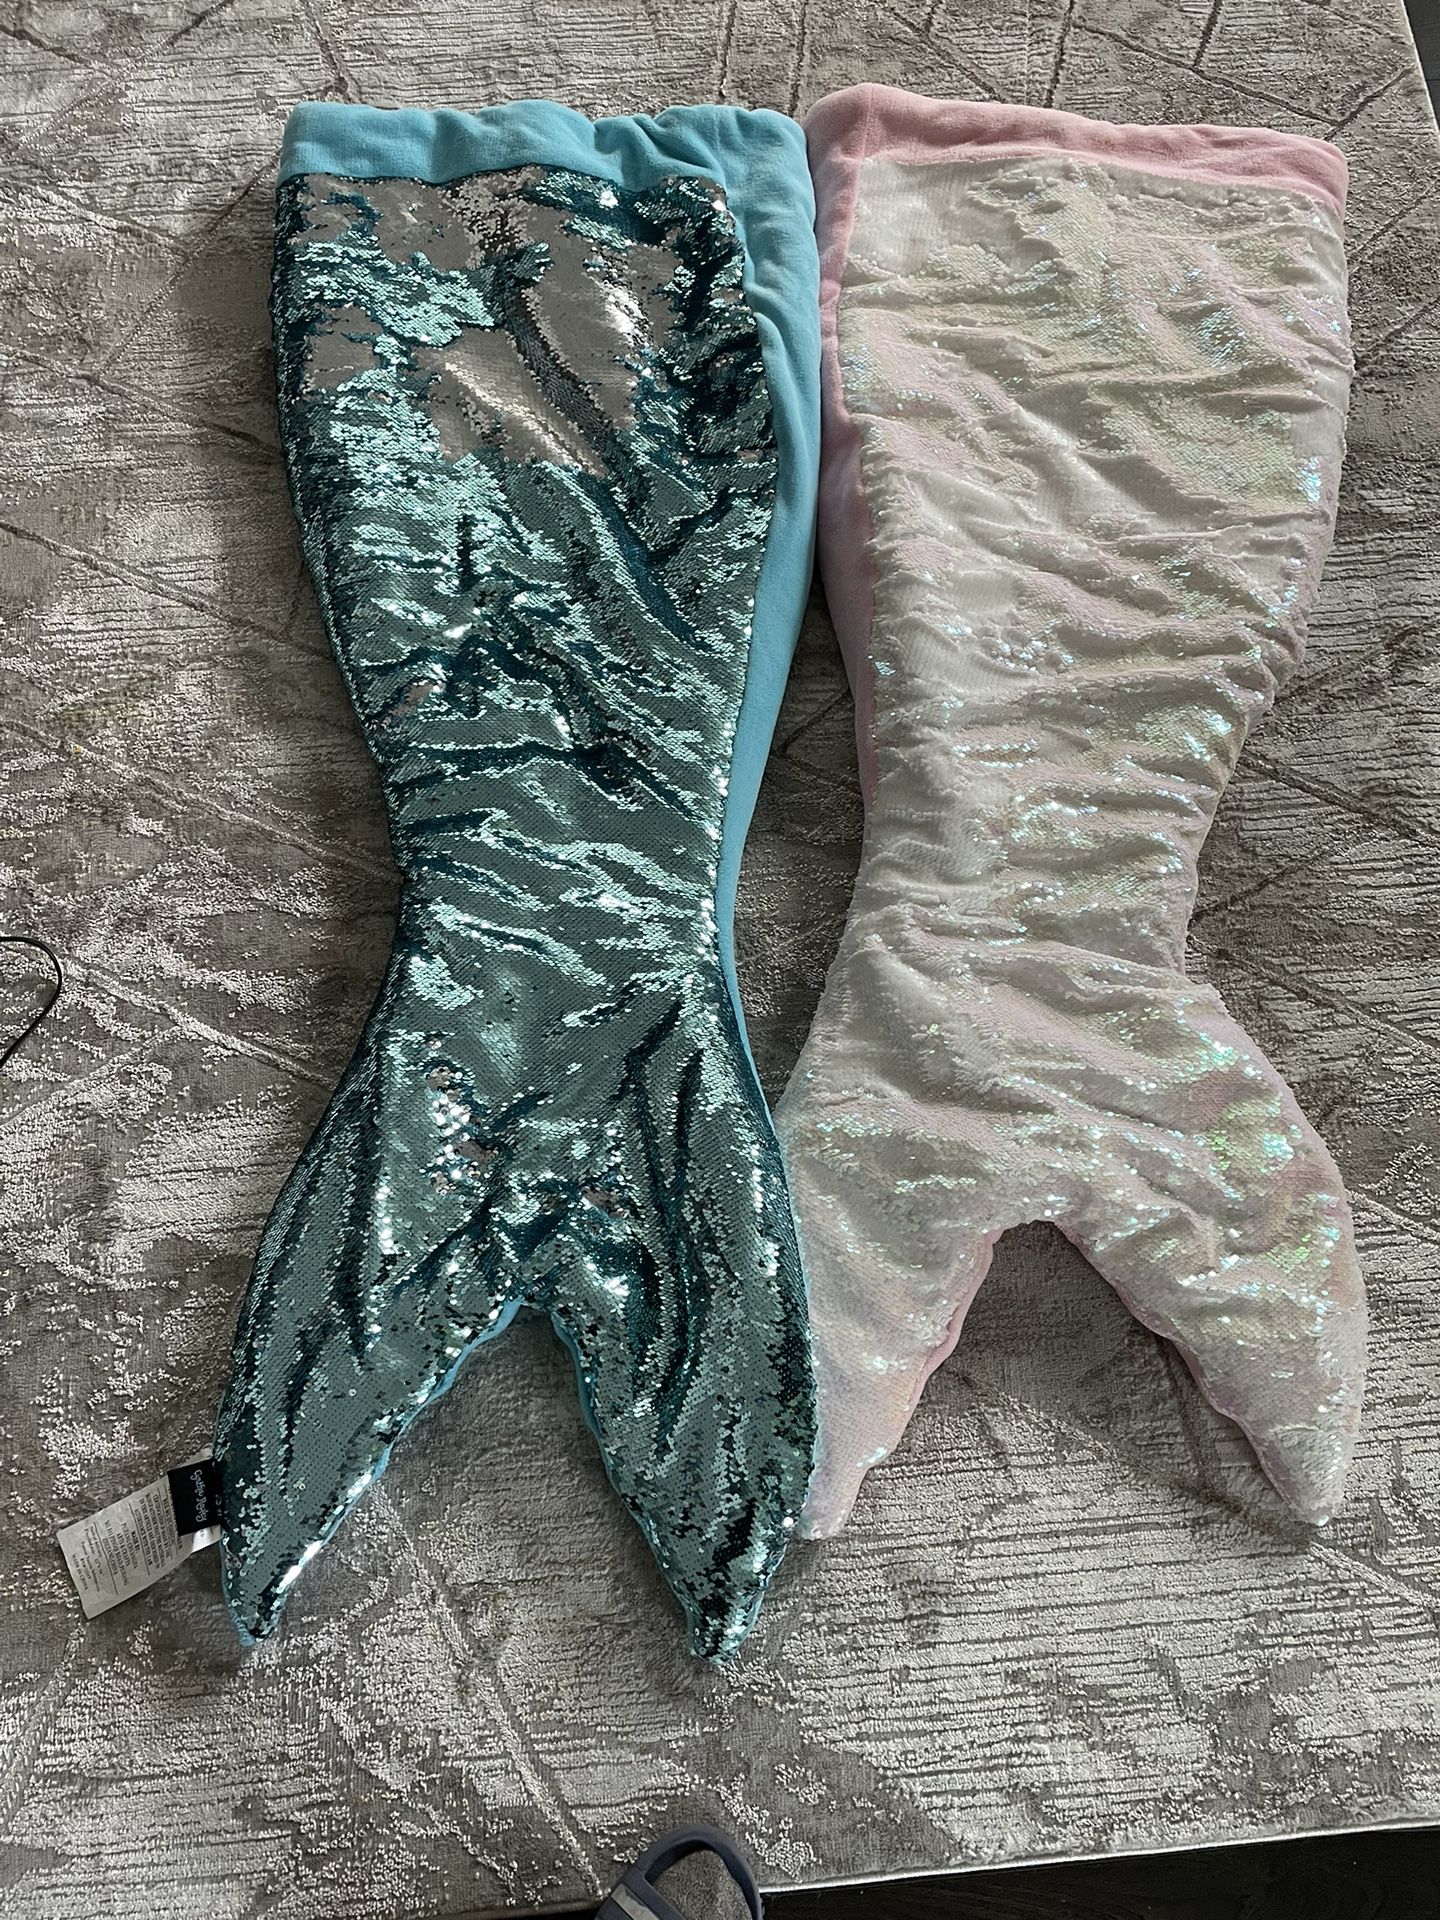 Girls Mermaid Tail Blankets 